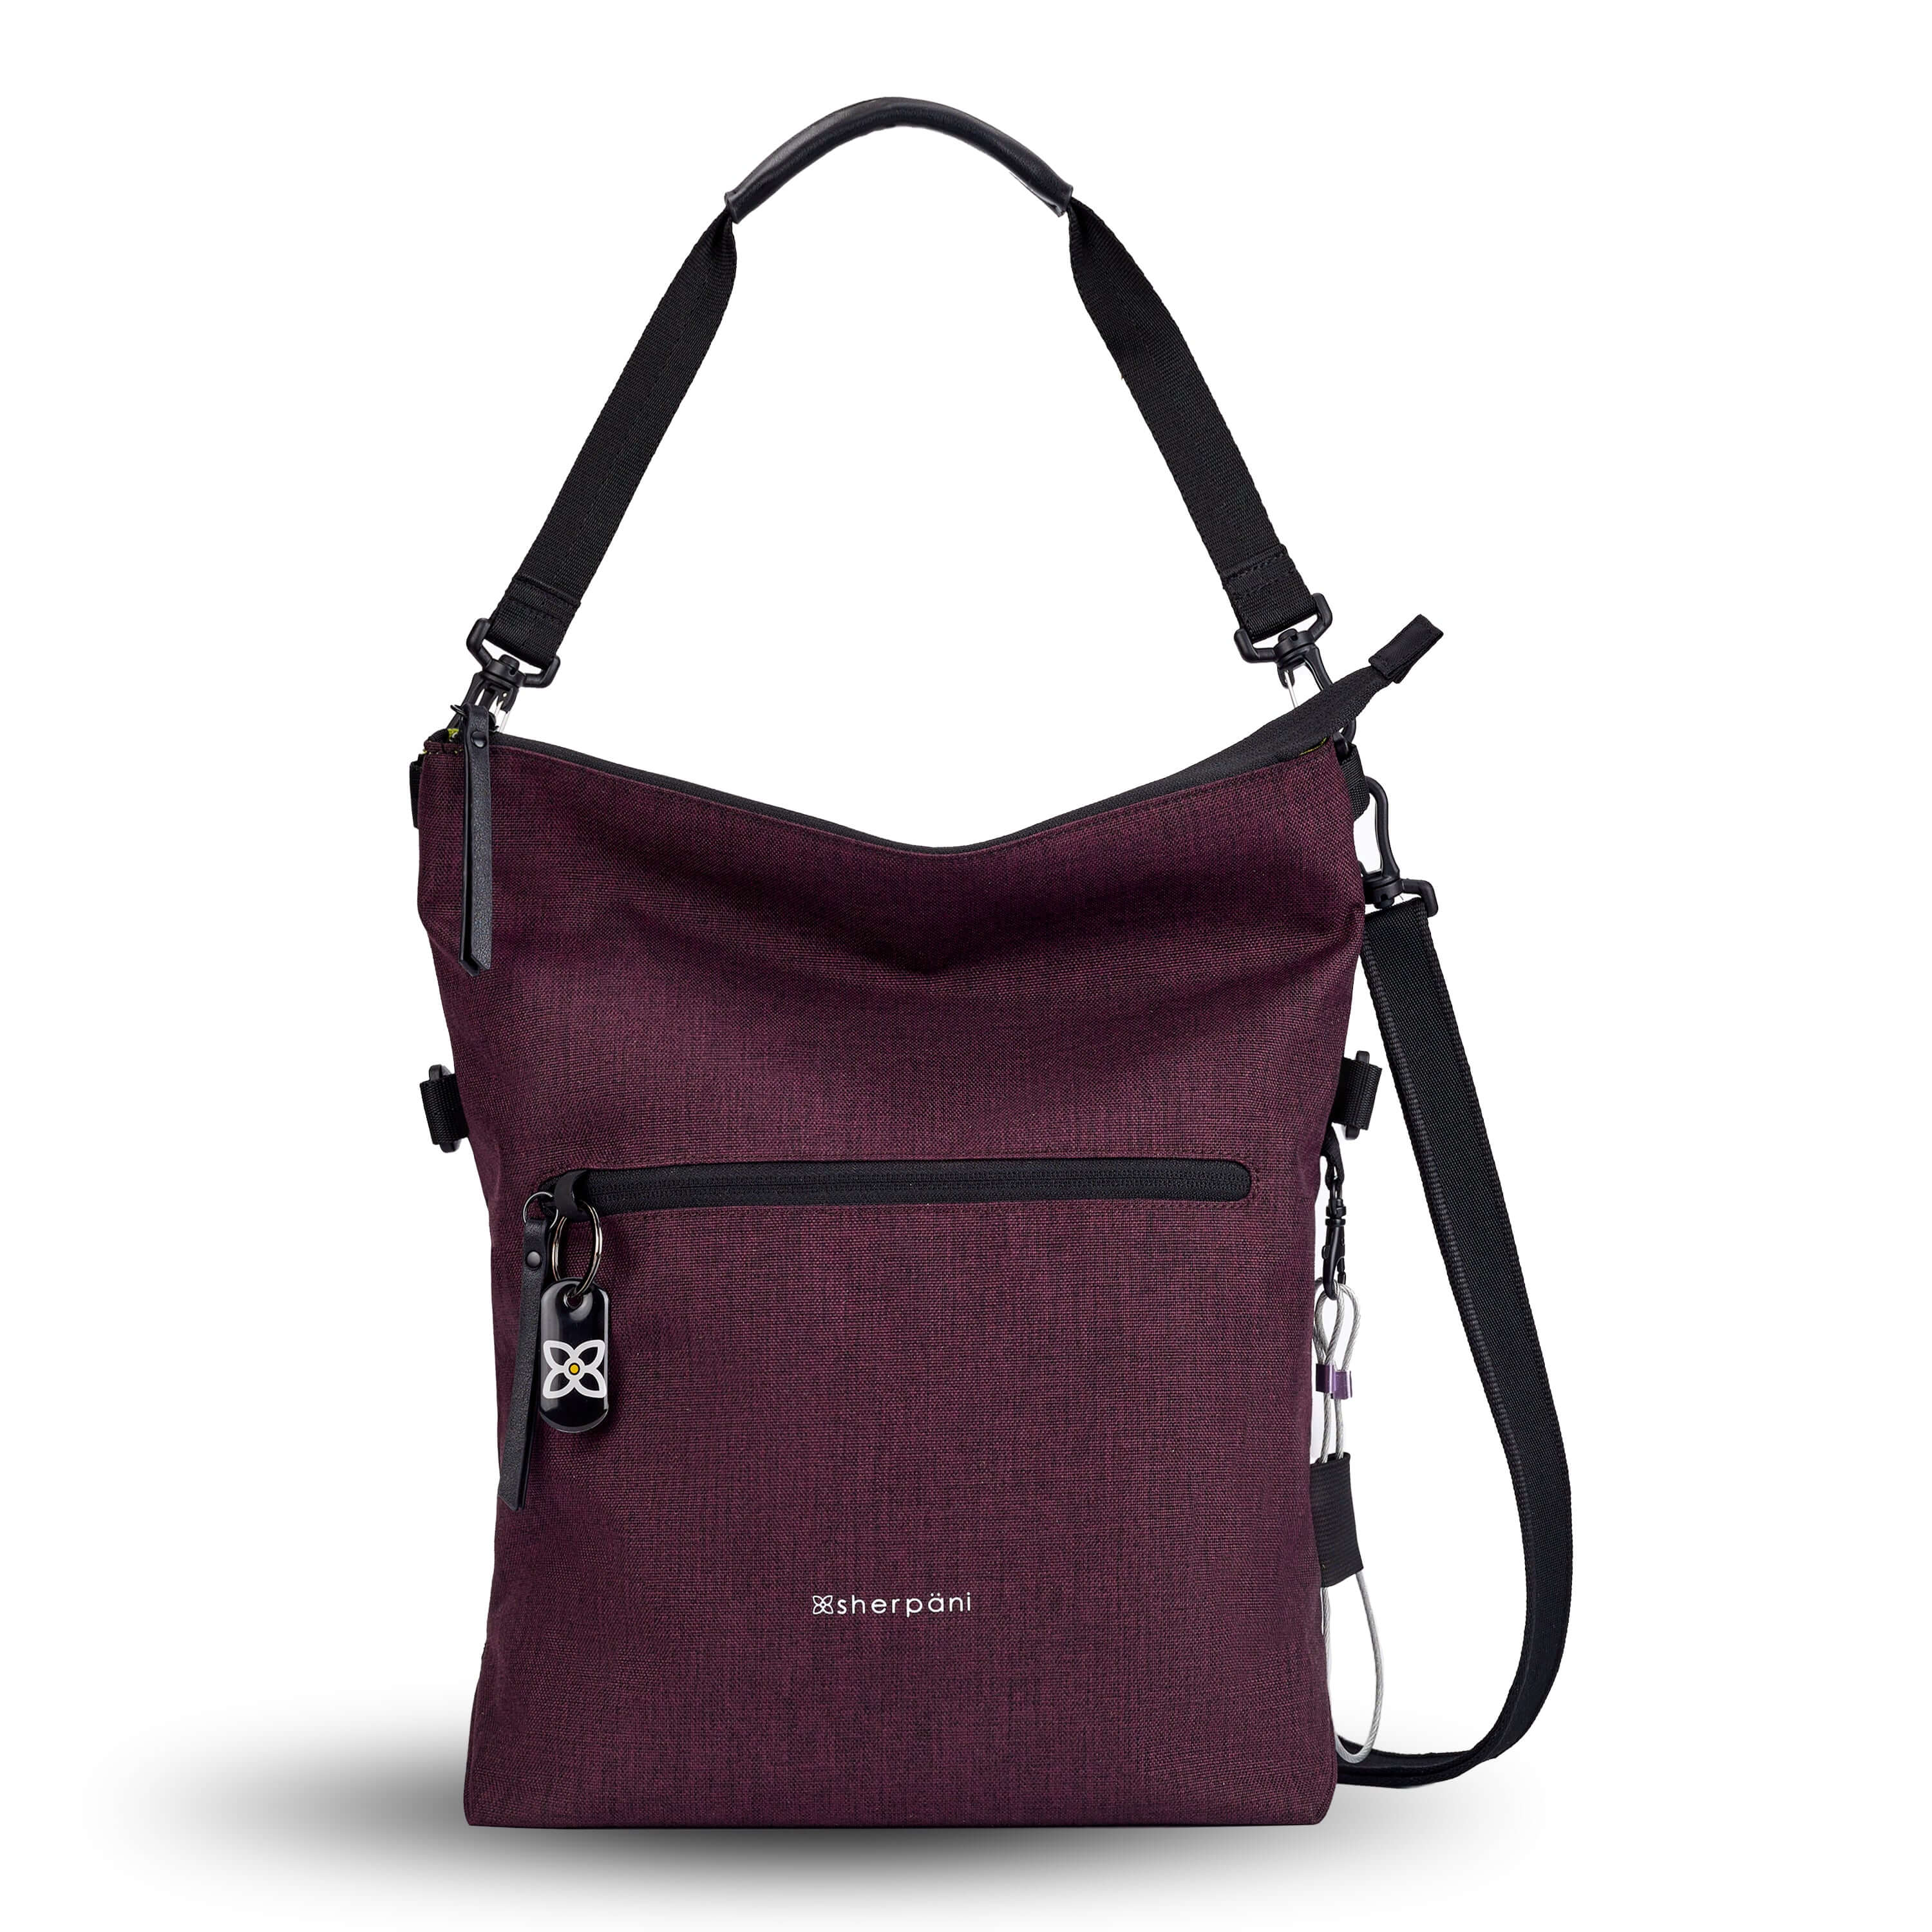 Plum Canvas Bag With Zipper Closure Women Shoulder Bag, Crossbody Bag,  Messenger Bag, Travel Bag, Everyday Light Weight Bag SMILEY 